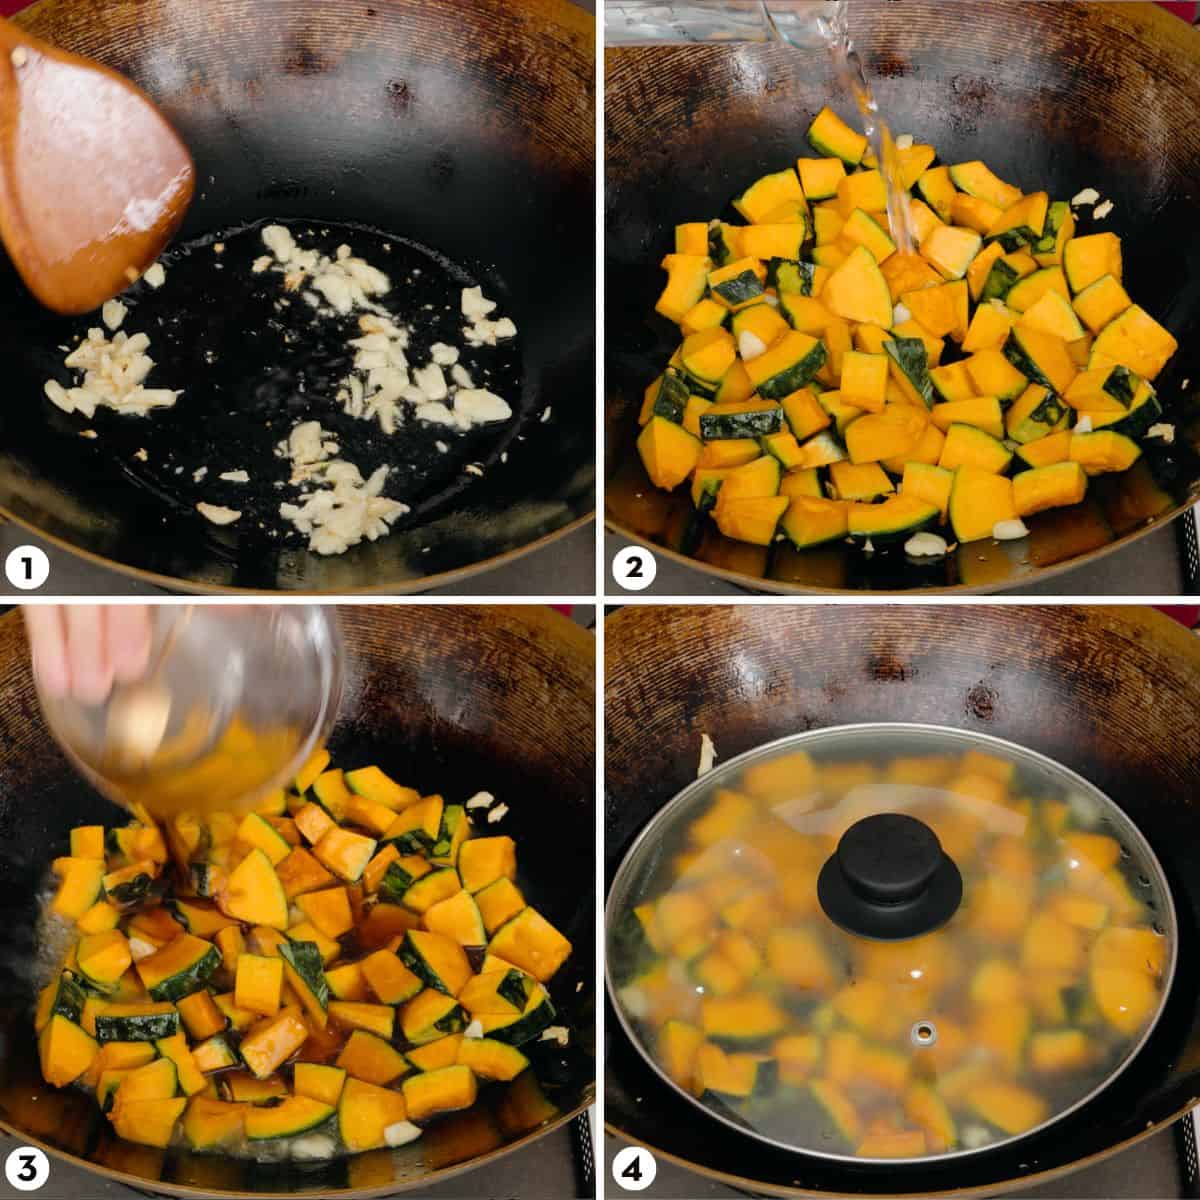 process shots for how to make kabocha stir fry steps 1-4